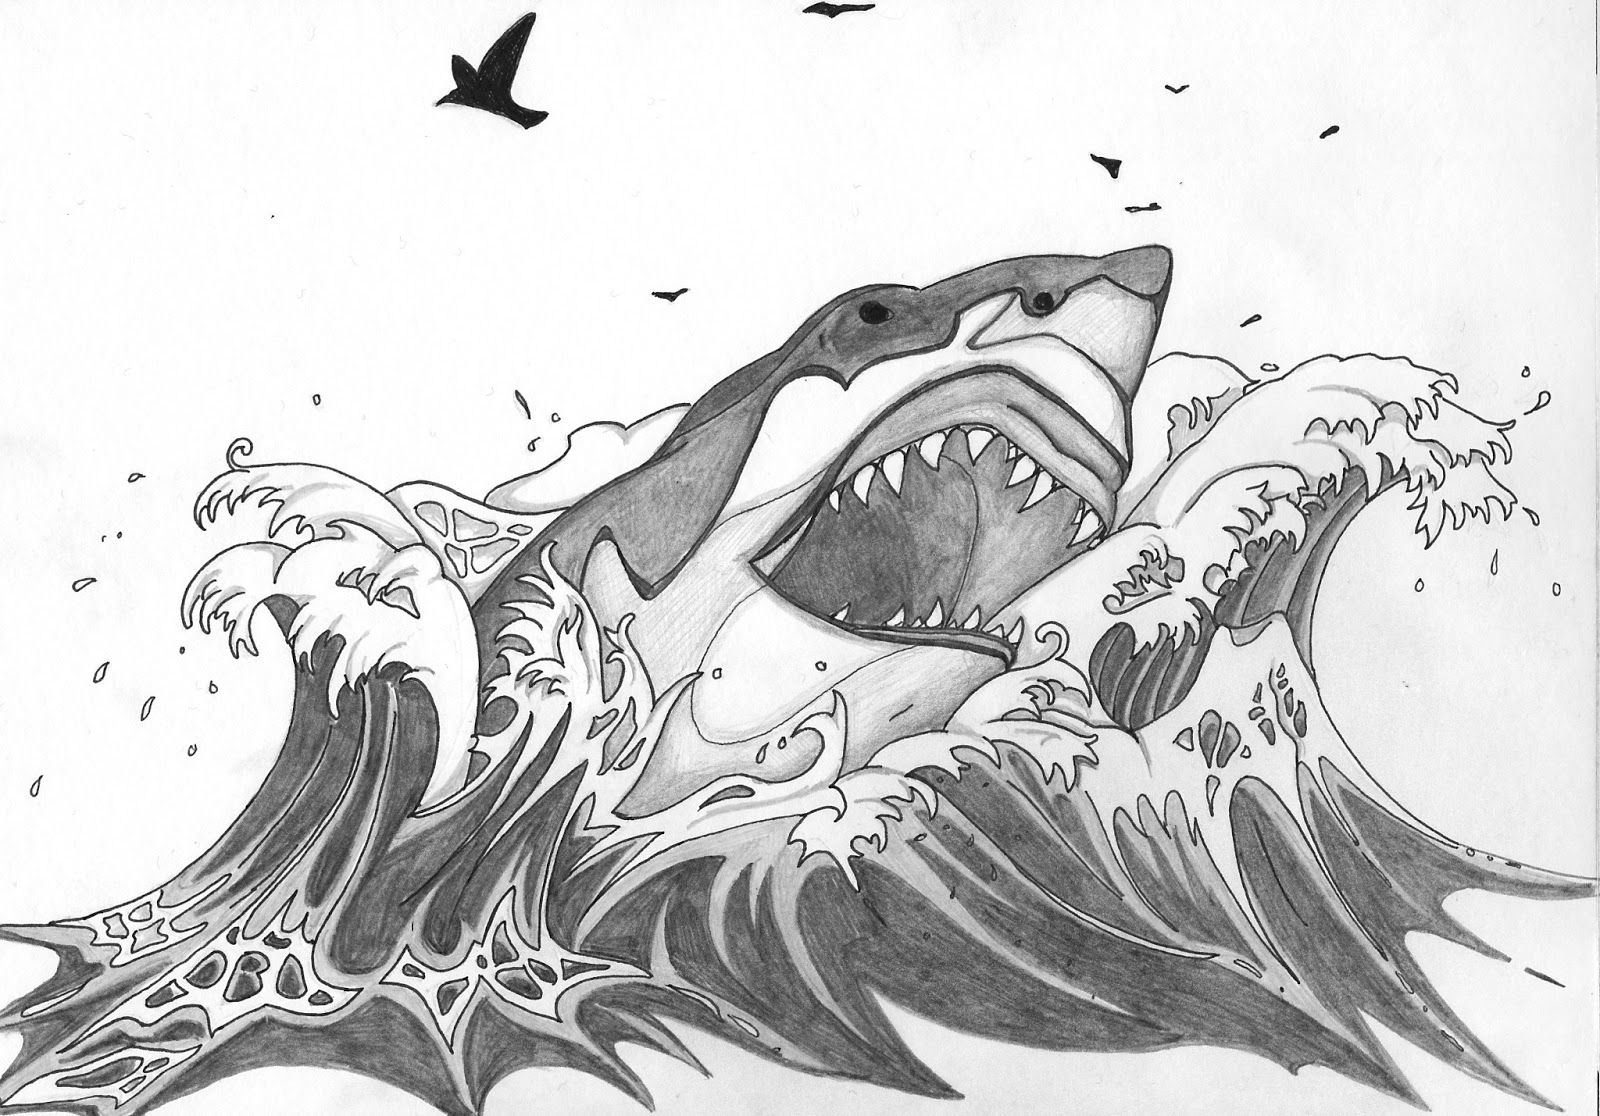 Рисунок акулы для срисовки. Акула эскиз. Акула набросок. Тату акула эскиз. Рисунок акулы карандашом для срисовки.